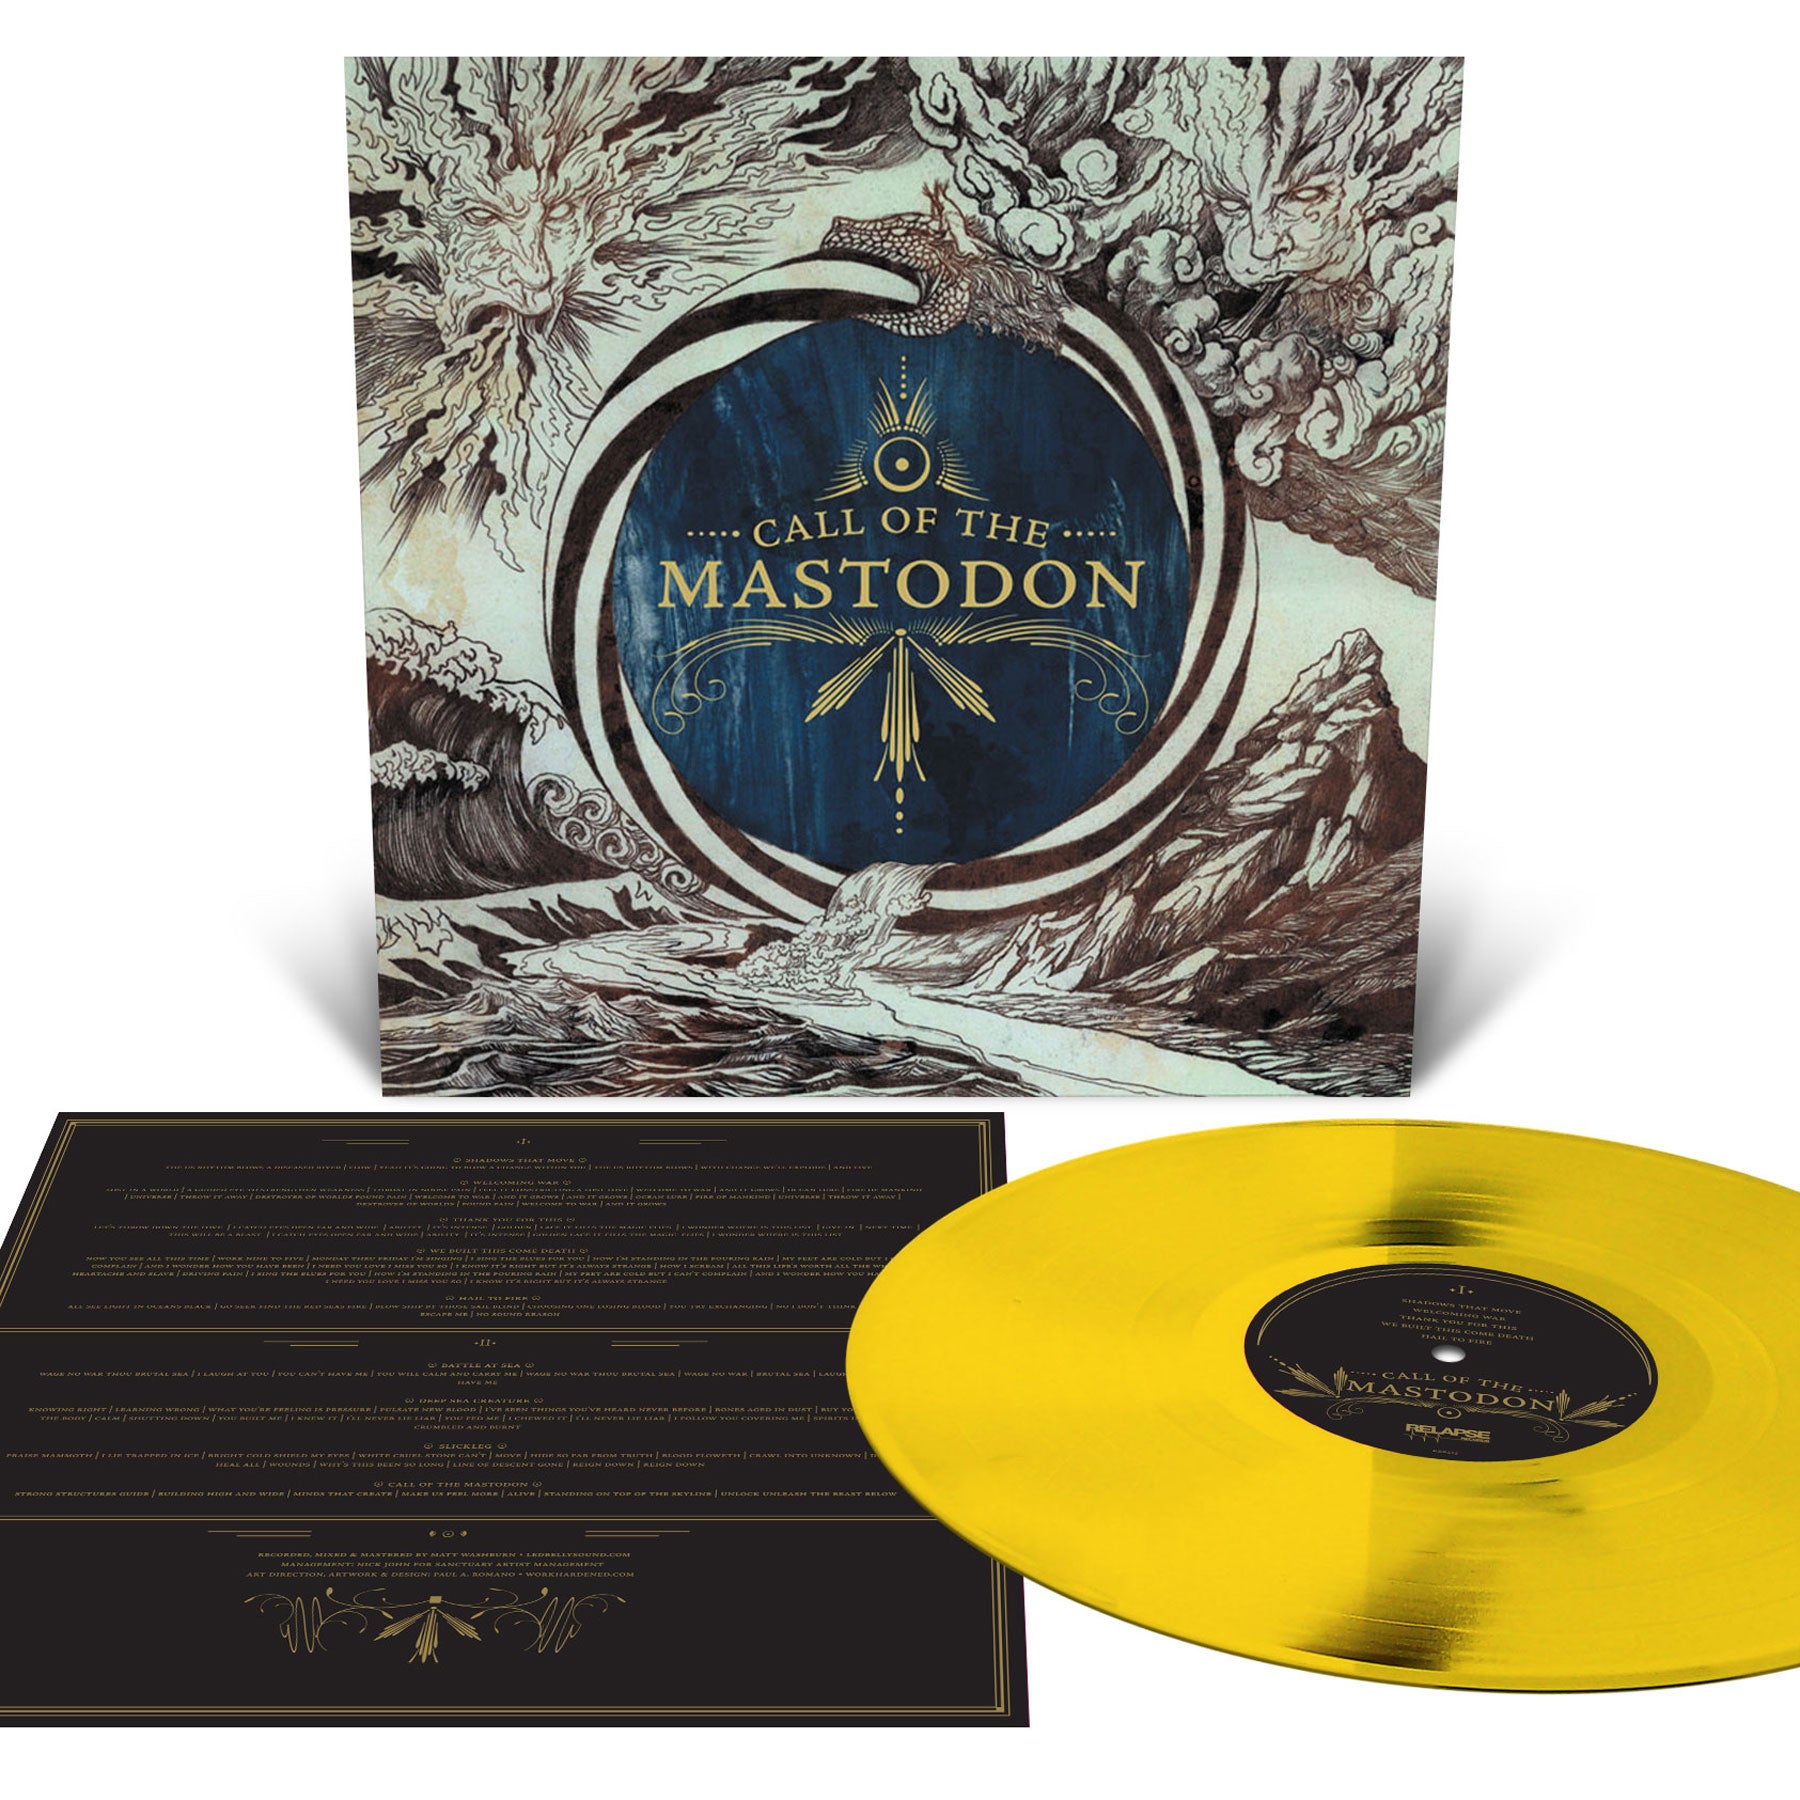 Mastodon "Call of the Mastodon" 12"